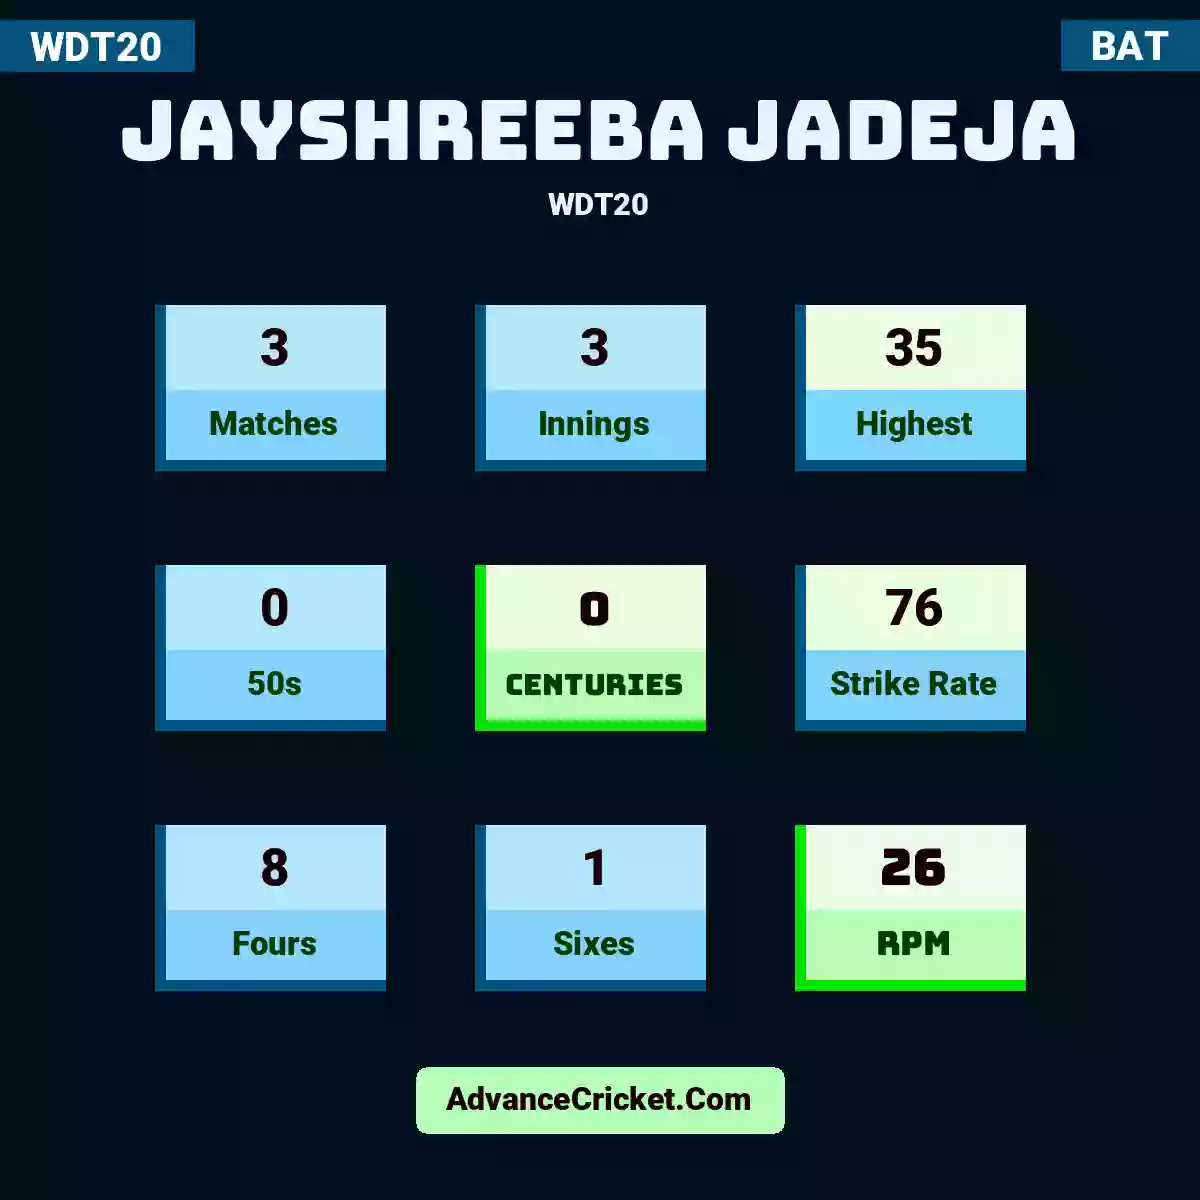 Jayshreeba Jadeja WDT20 , Jayshreeba Jadeja played 3 matches, scored 35 runs as highest, 0 half-centuries, and 0 centuries, with a strike rate of 76. J.Jadeja hit 8 fours and 1 sixes, with an RPM of 26.